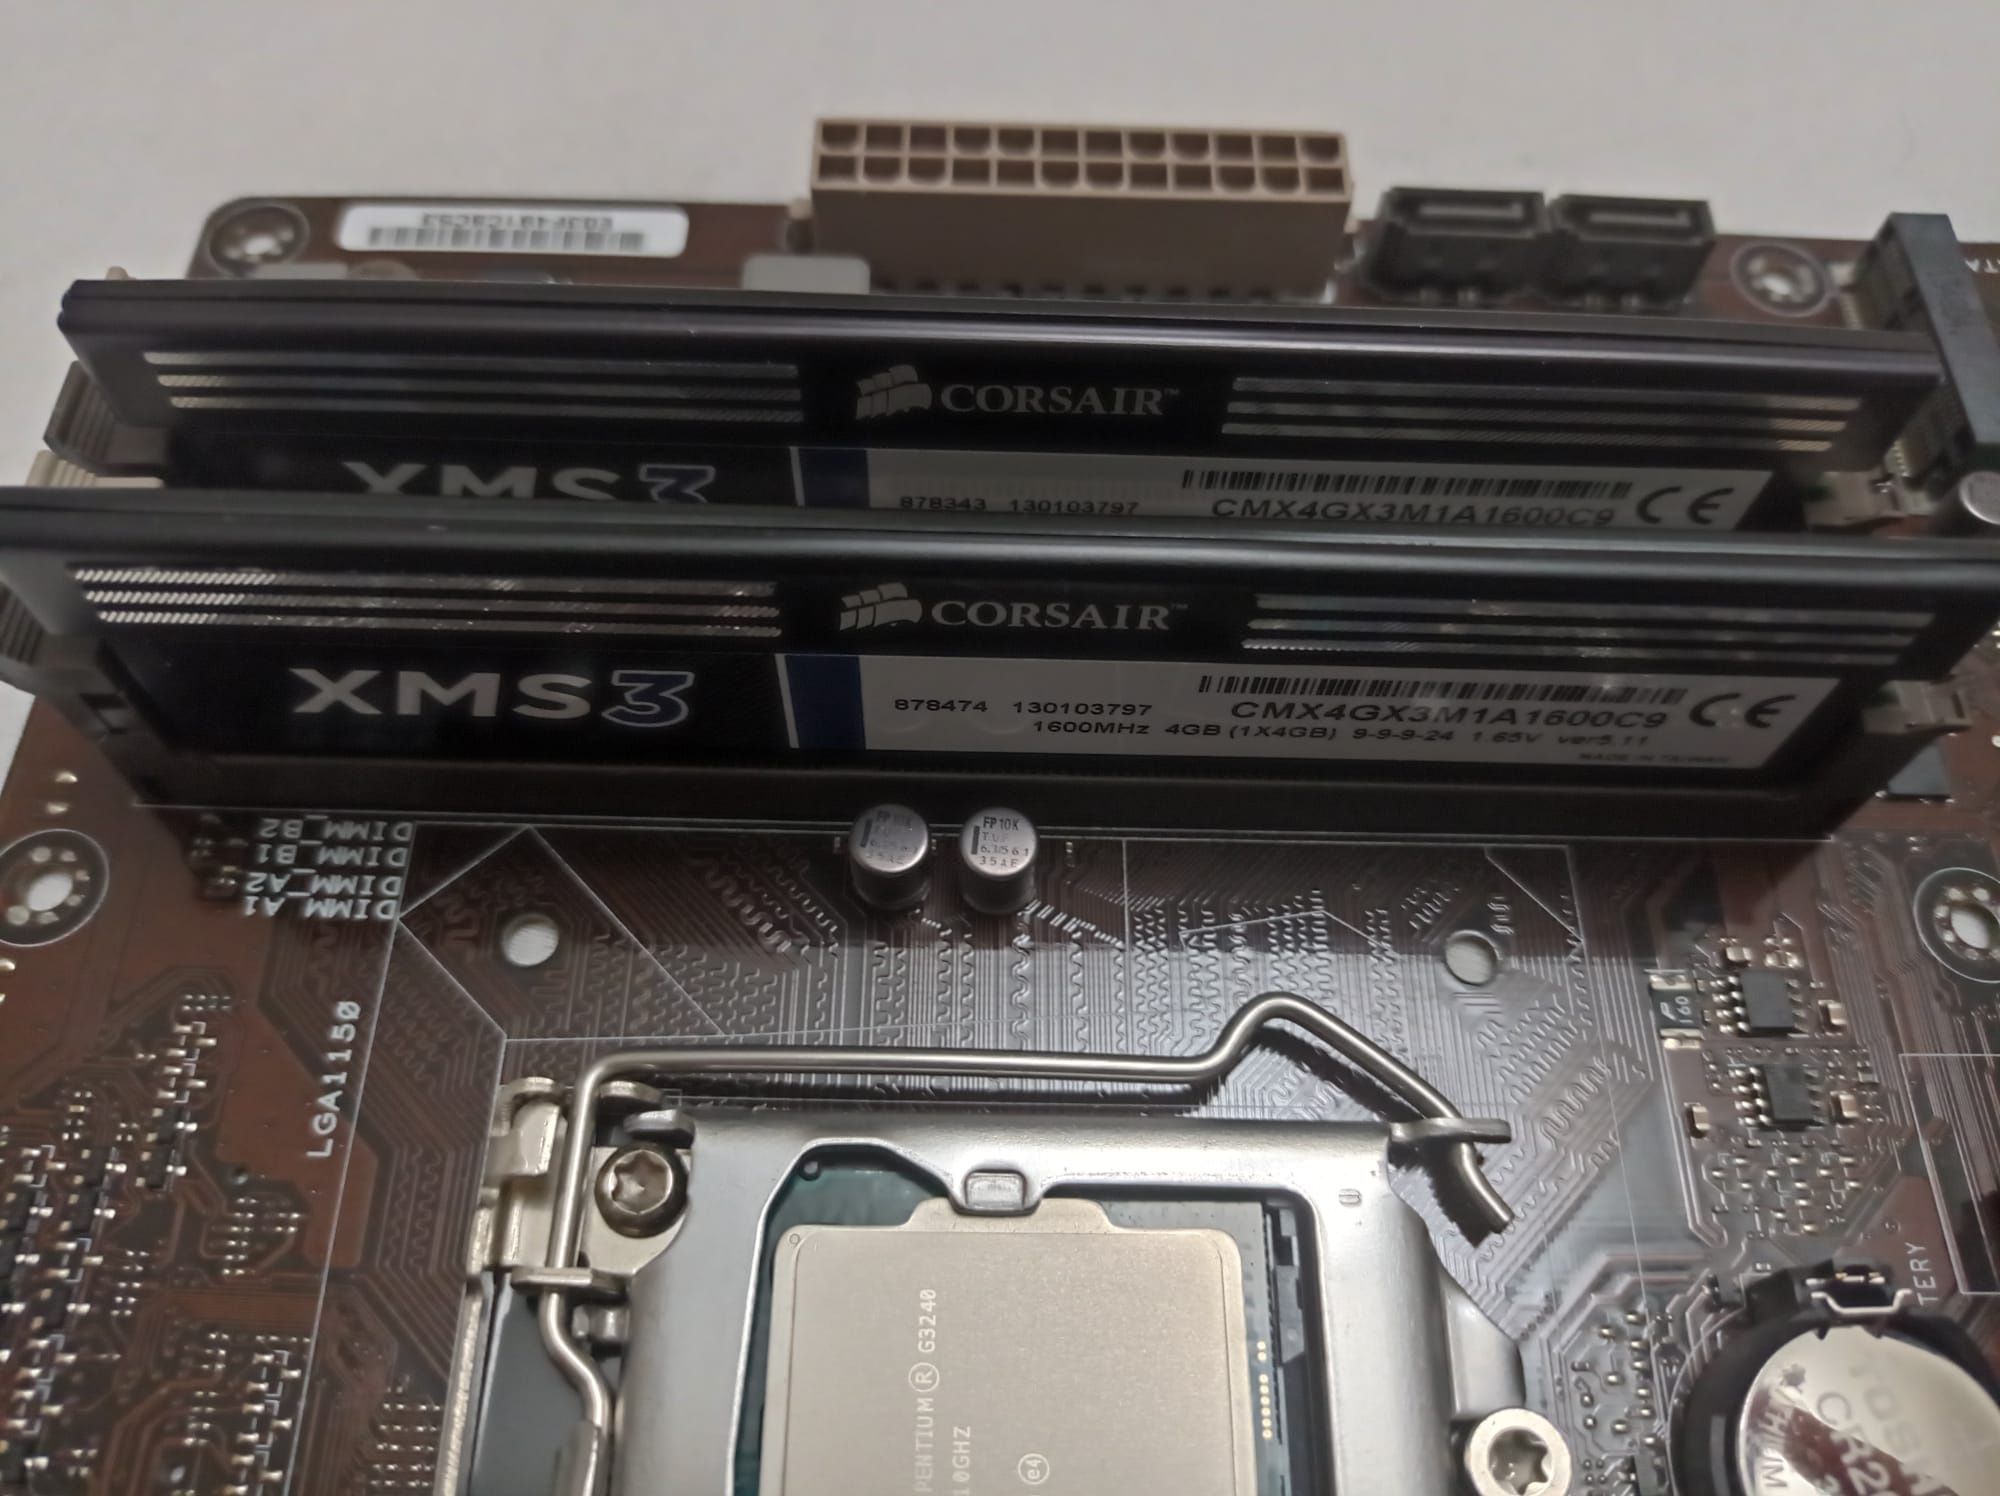 Kit Intel G3240 8G DDR3 Asus CS-B